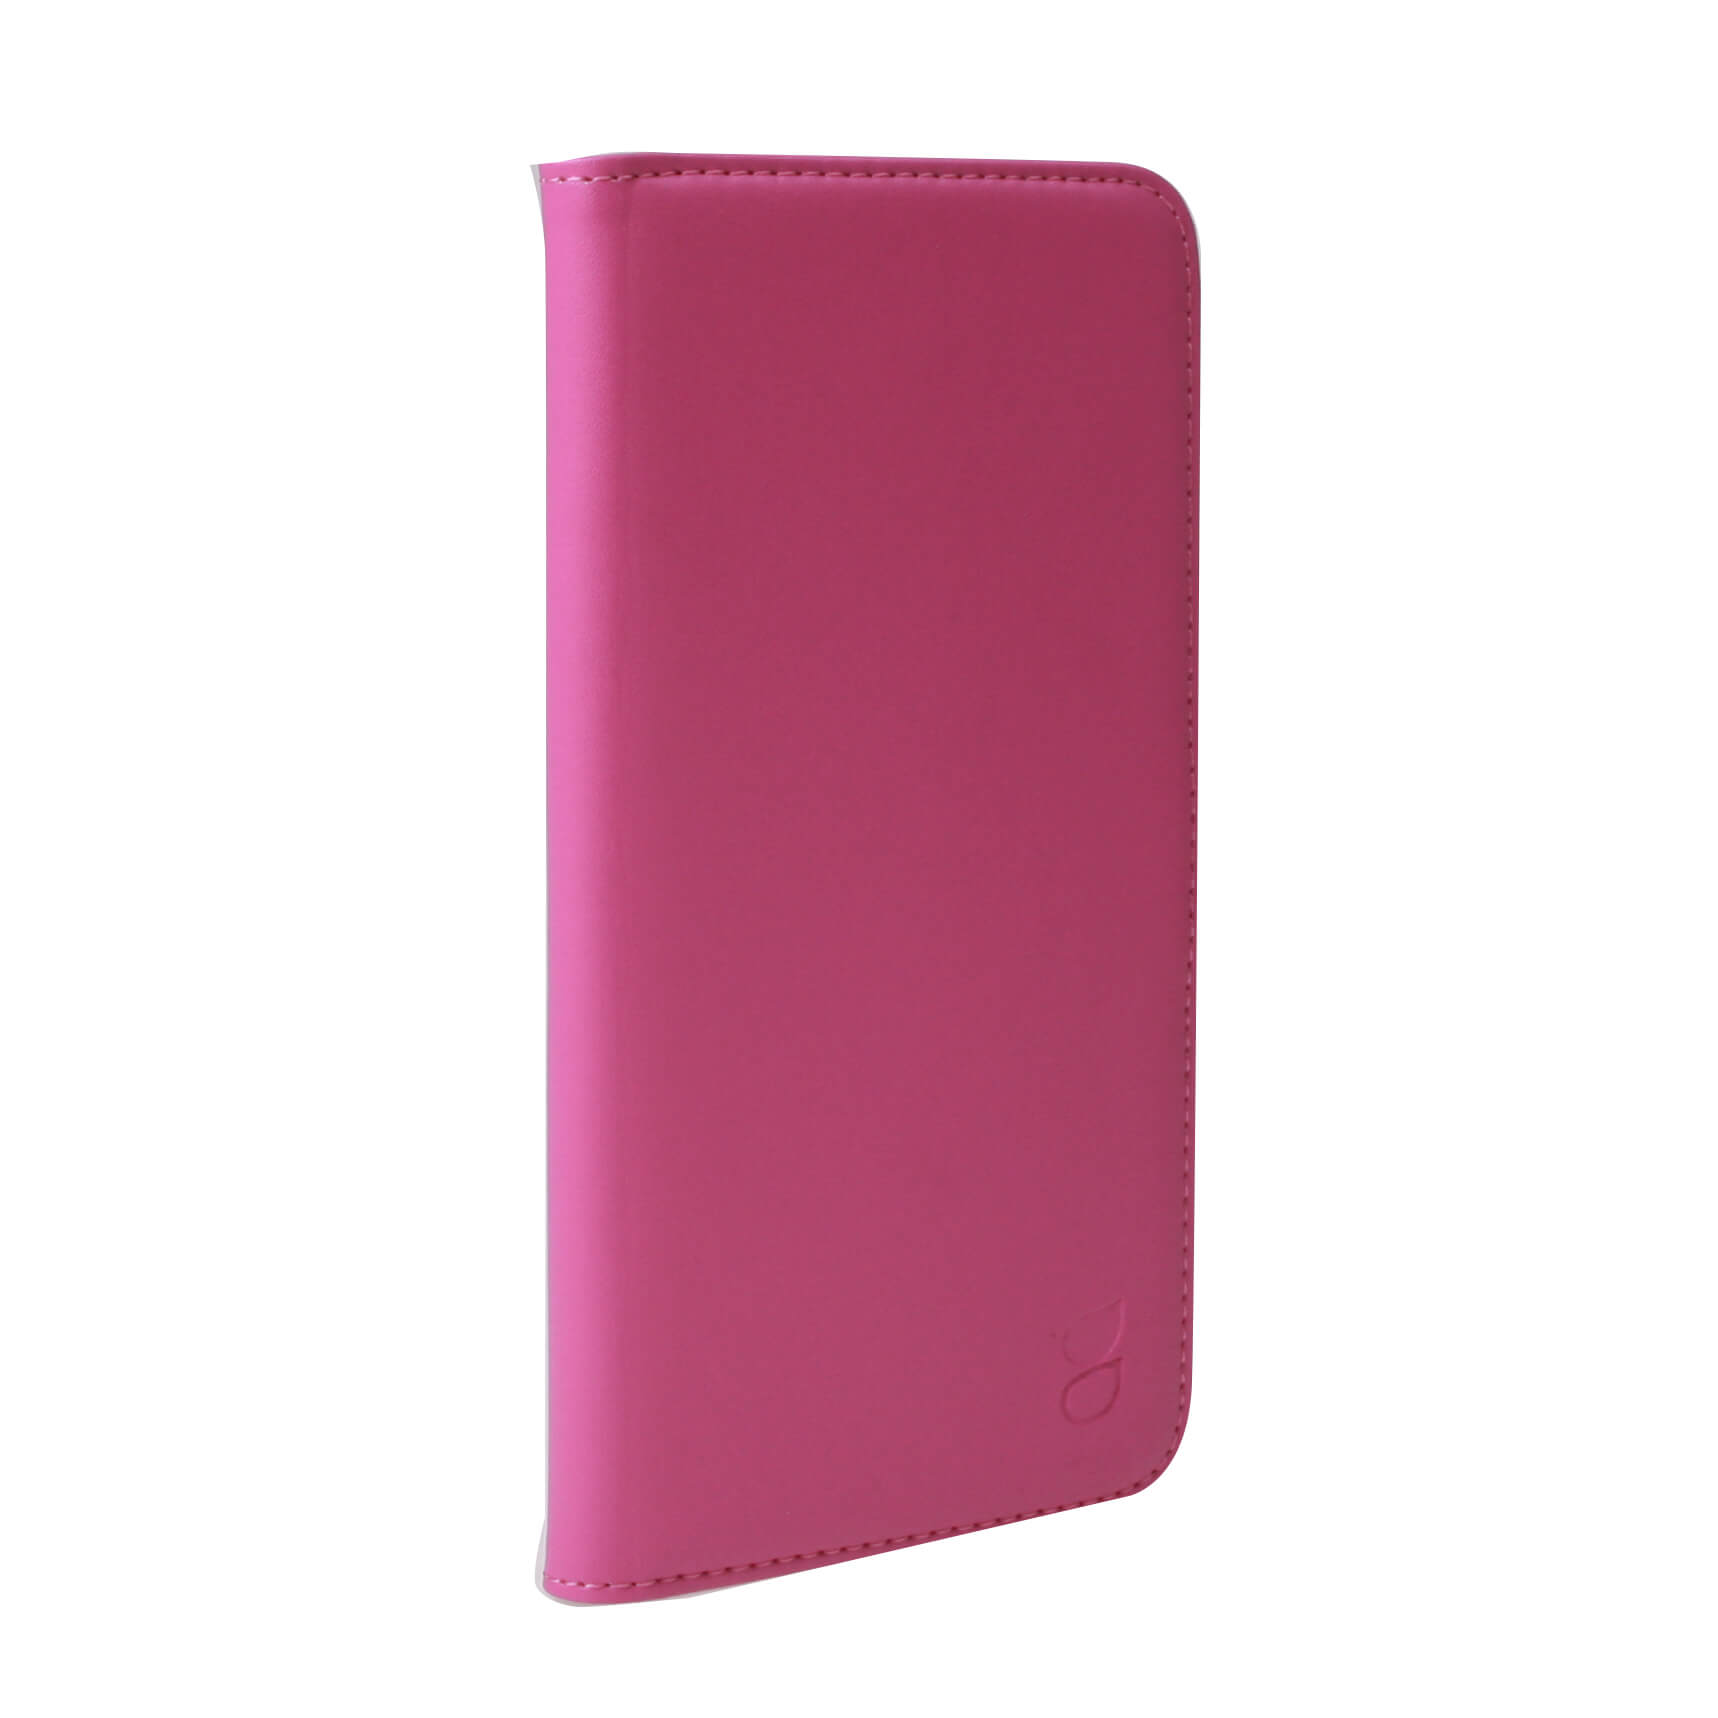 Wallet Case Pink - iPhone 6 Plus 